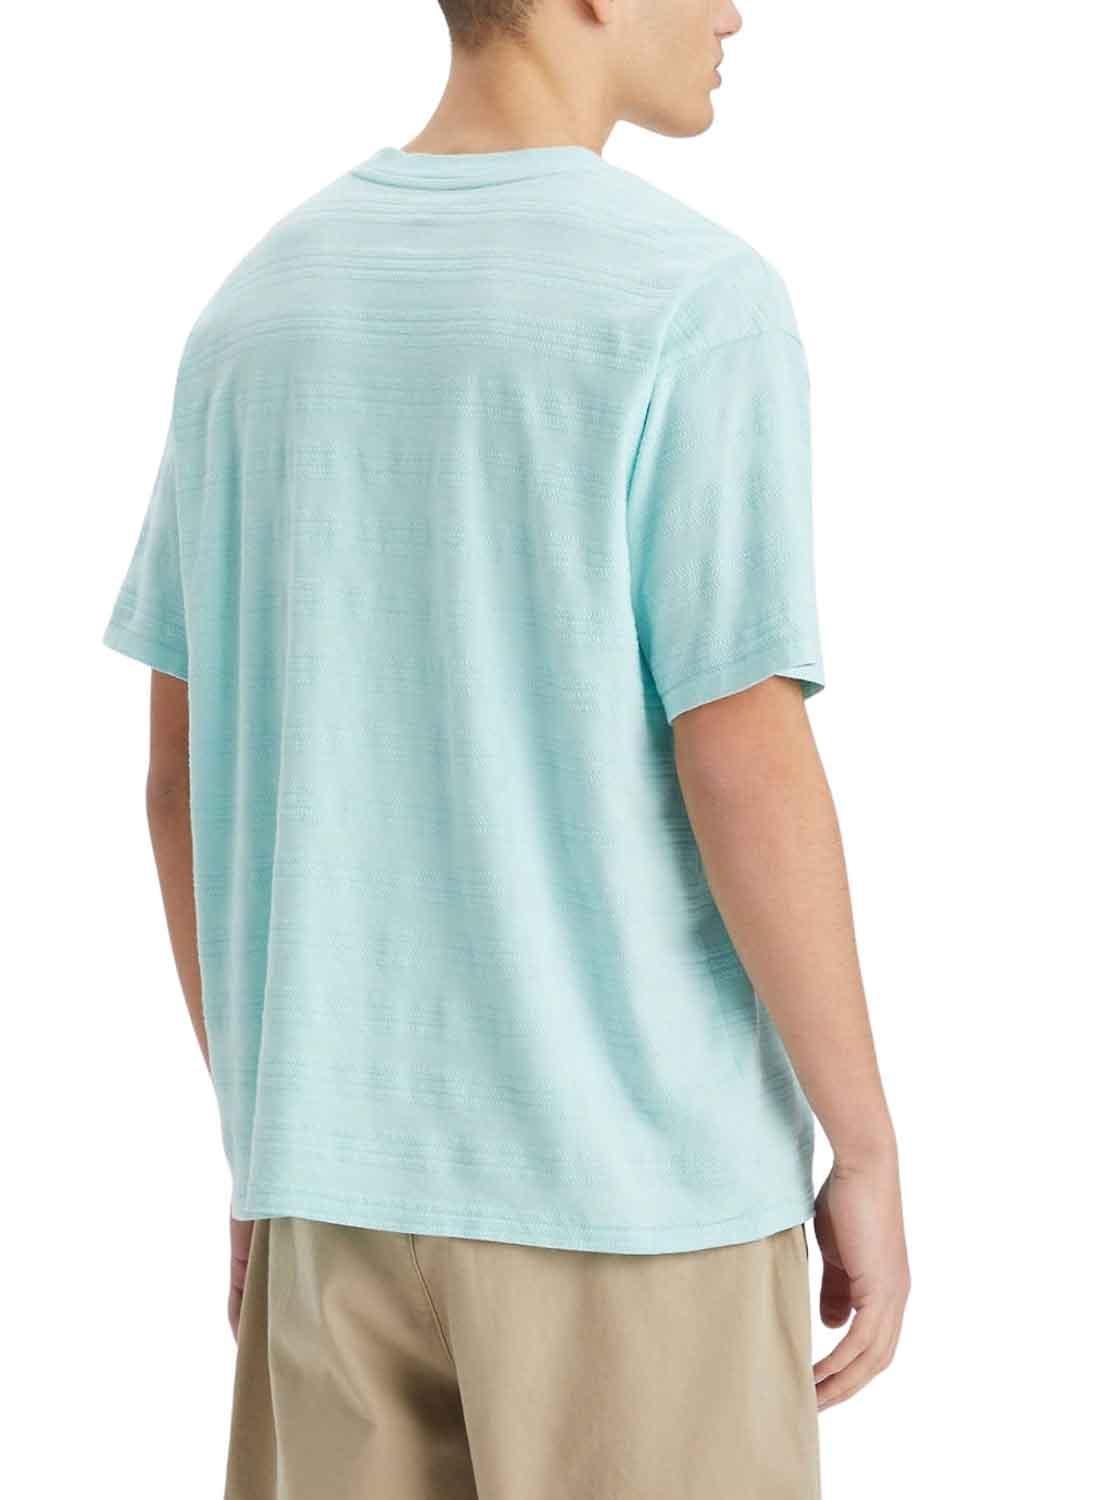 T-Shirt Levis Vintage Turchese per Uomo